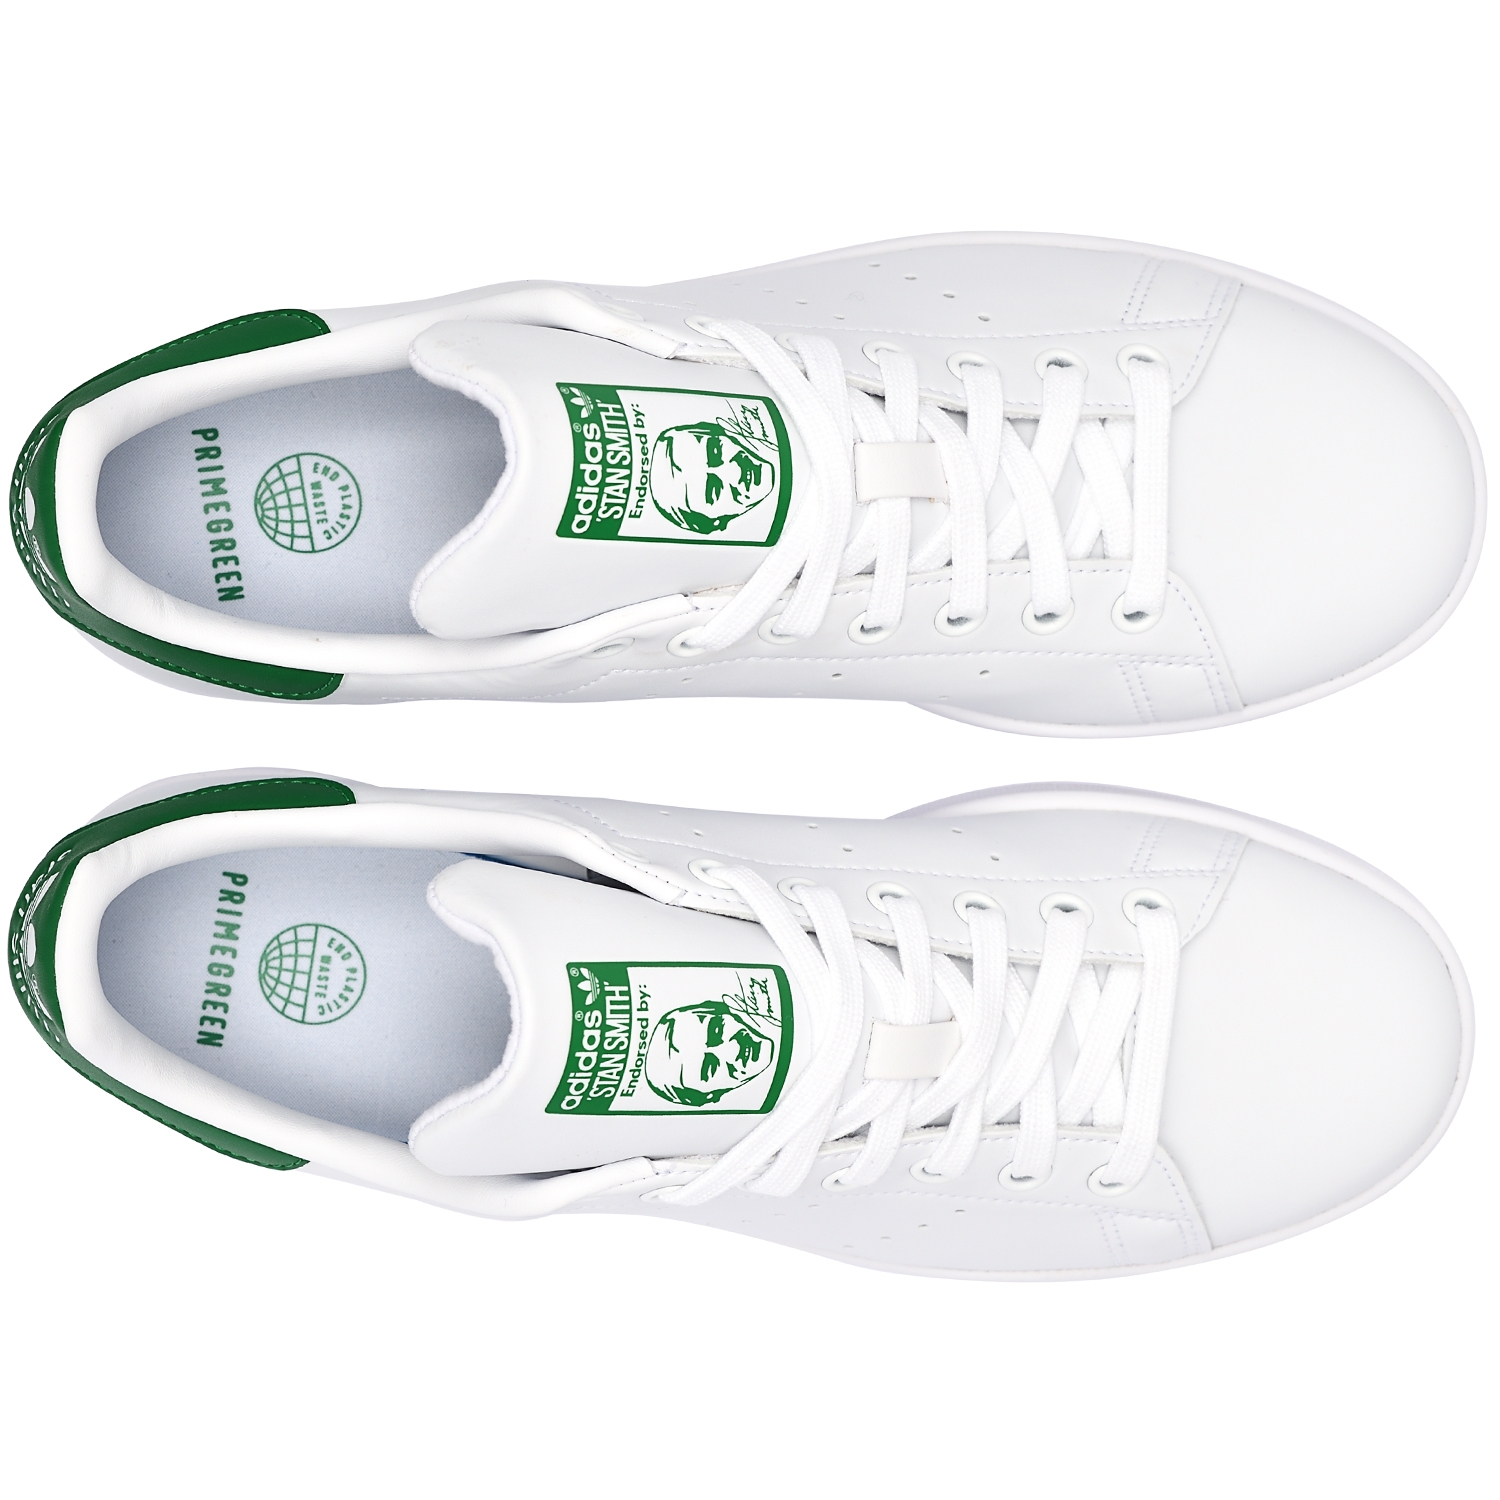 adidas Originals Stan Smith Cloud White / Green